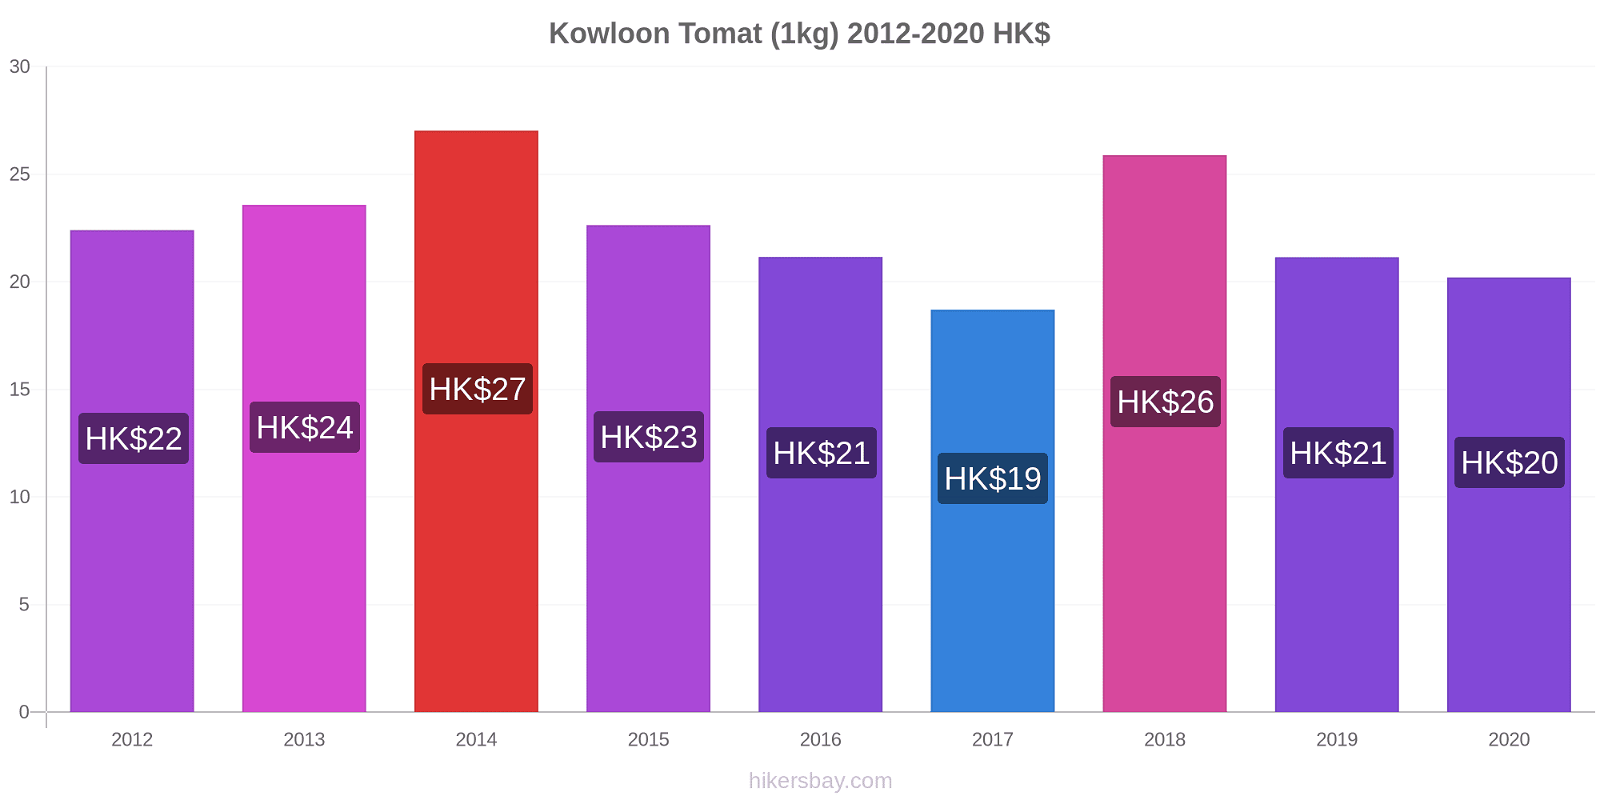 Kowloon perubahan harga Tomat (1kg) hikersbay.com